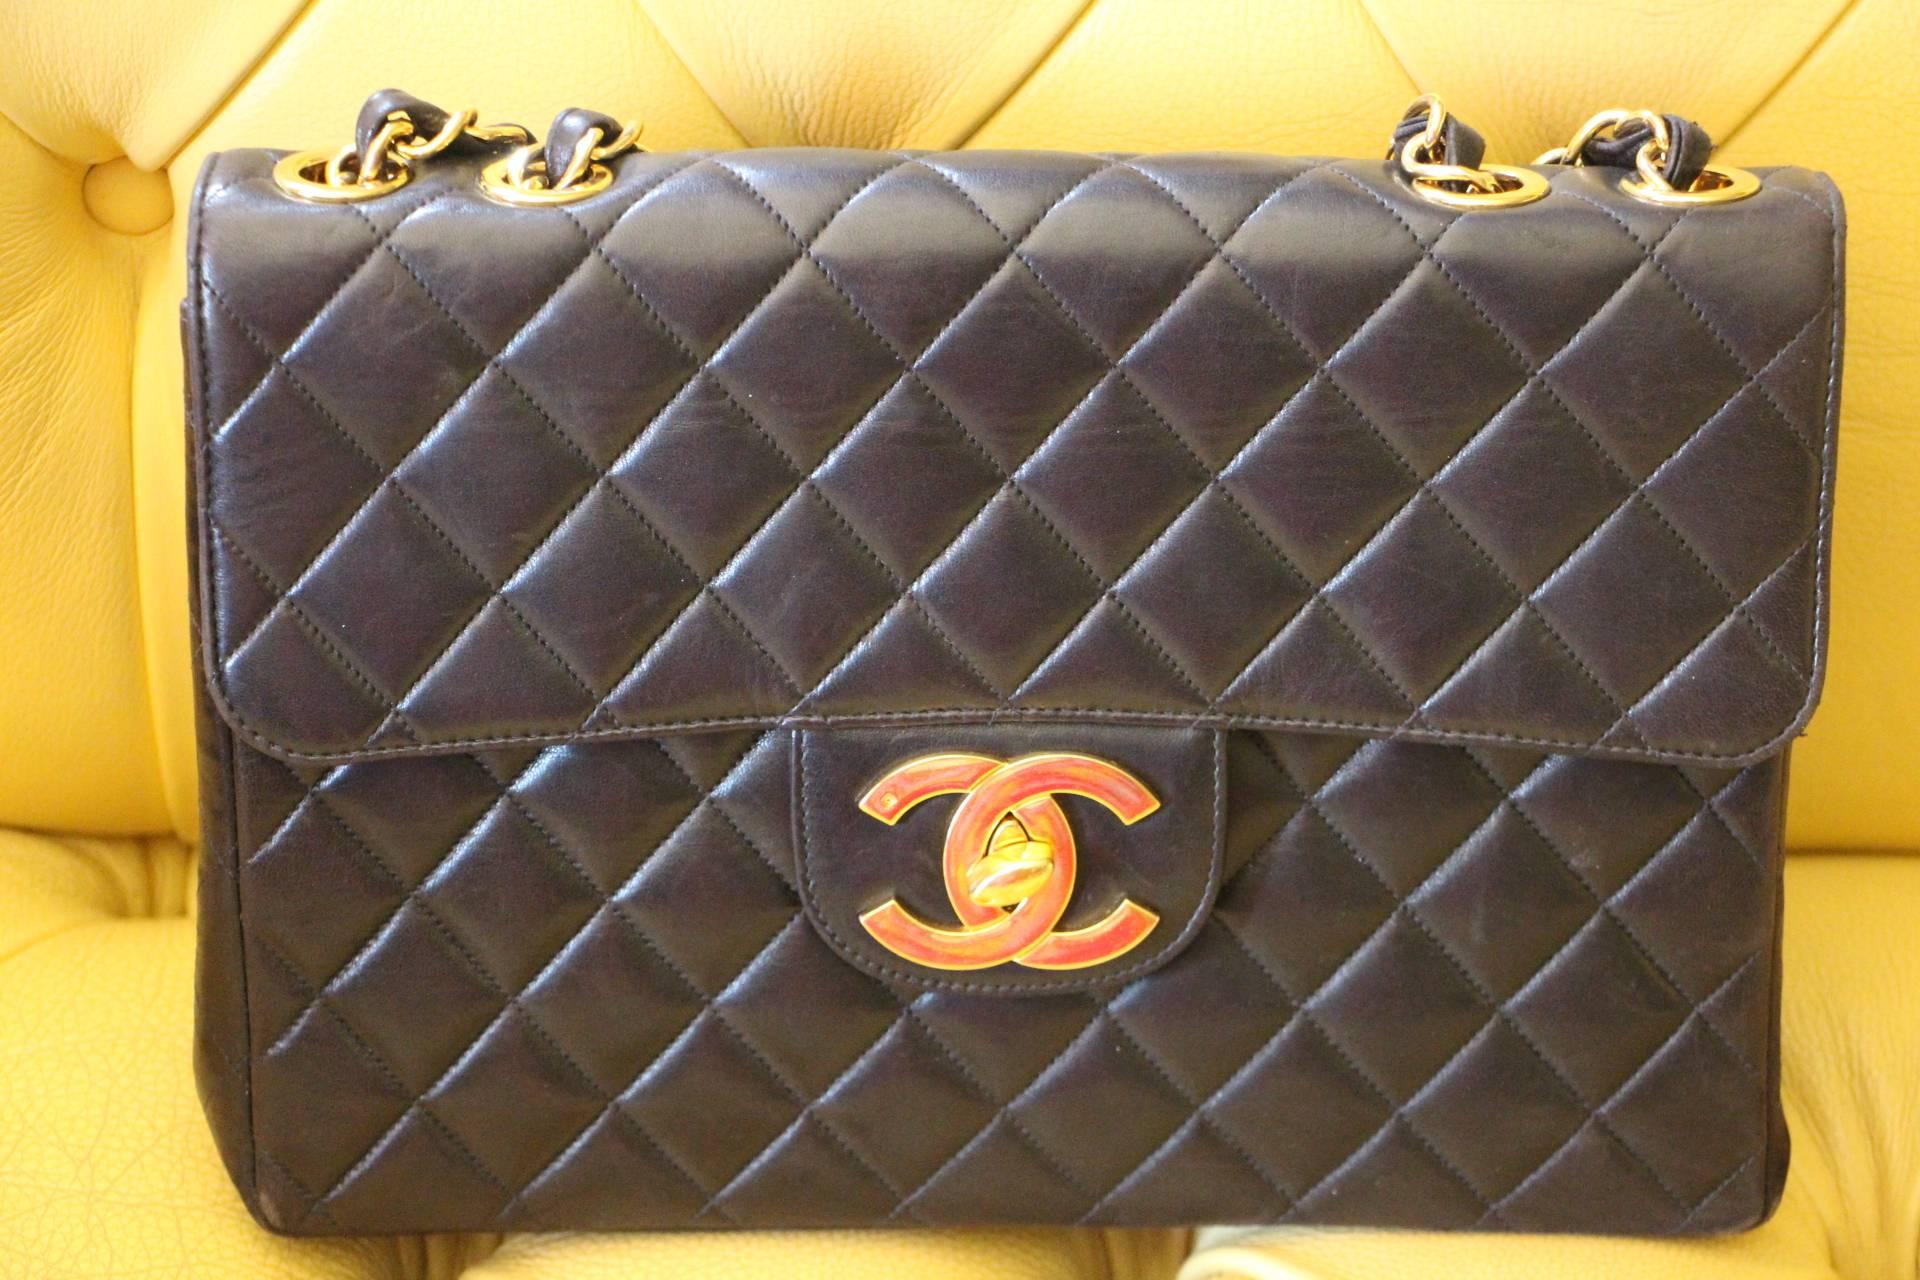 European Chanel Jumbo Flap Bag in Black Lambskin